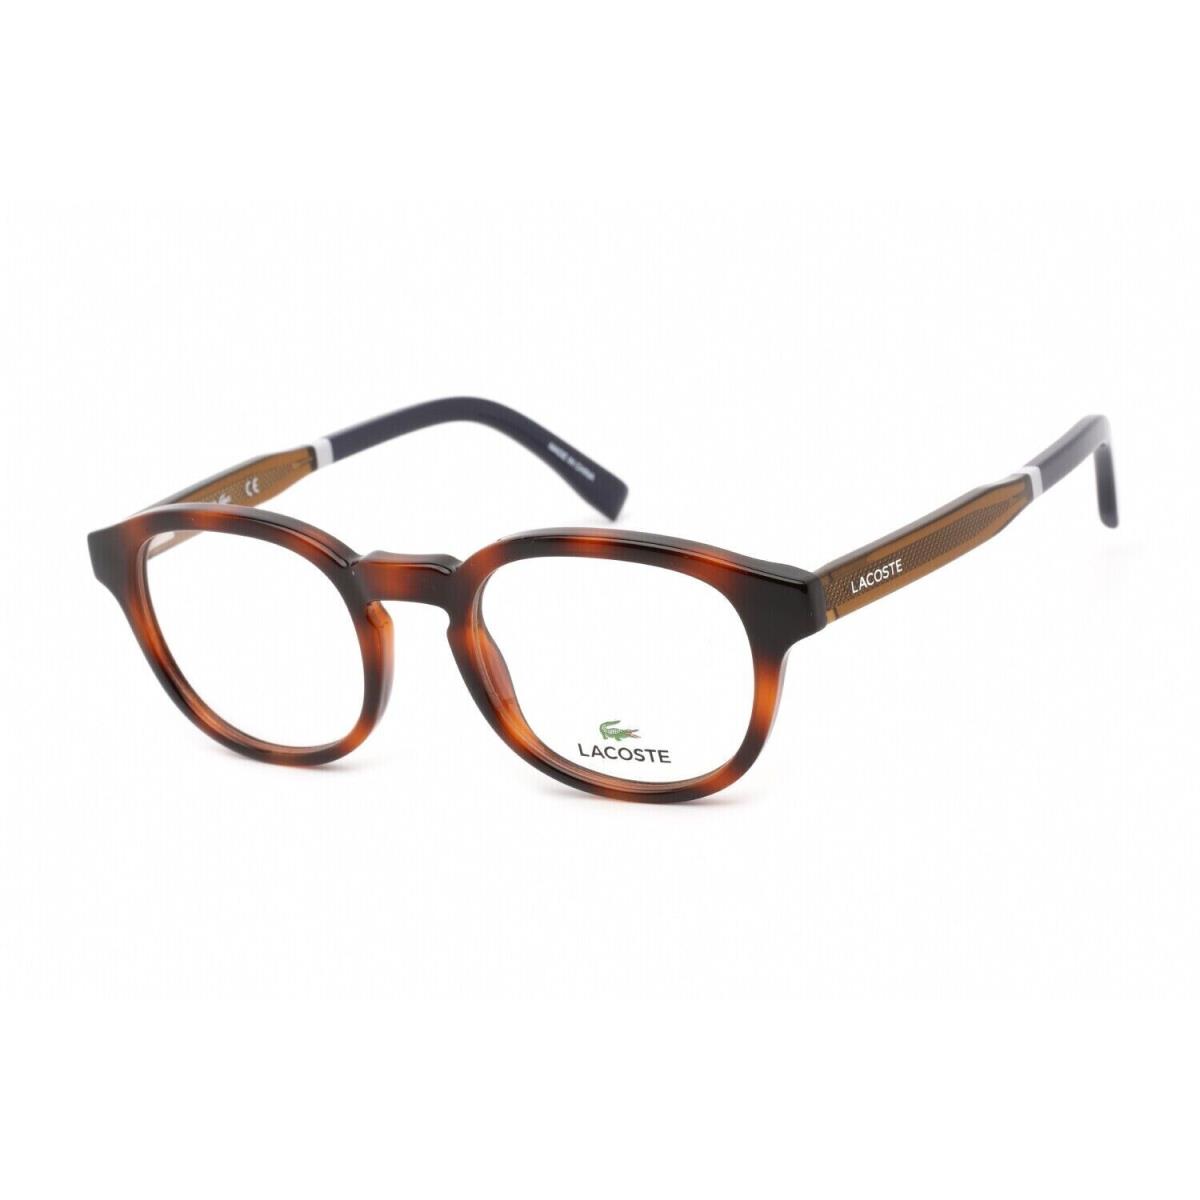 Lacoste Eyeglasses Frame with Case - L2891 230 - Havana Brown 50-21-145